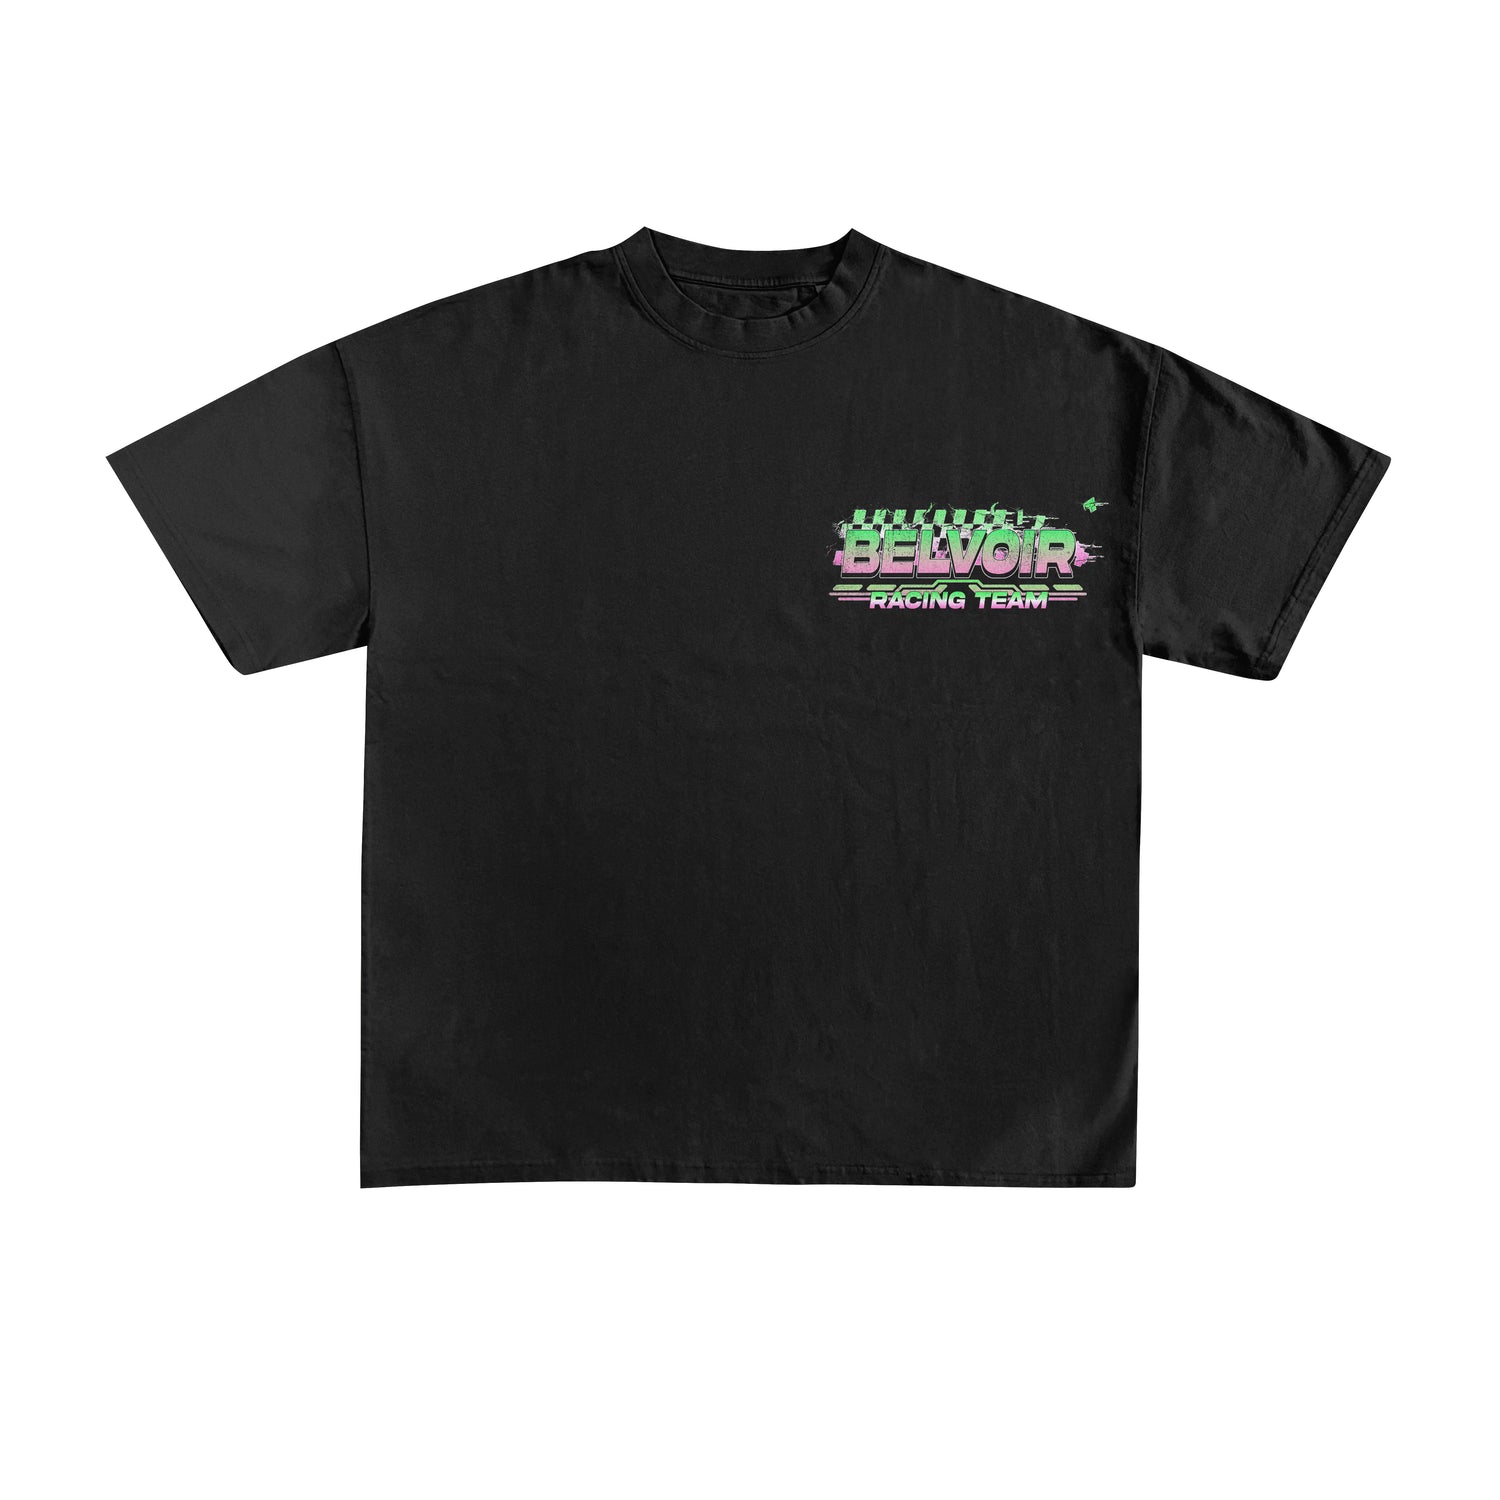 Racing Team T-Shirt Black